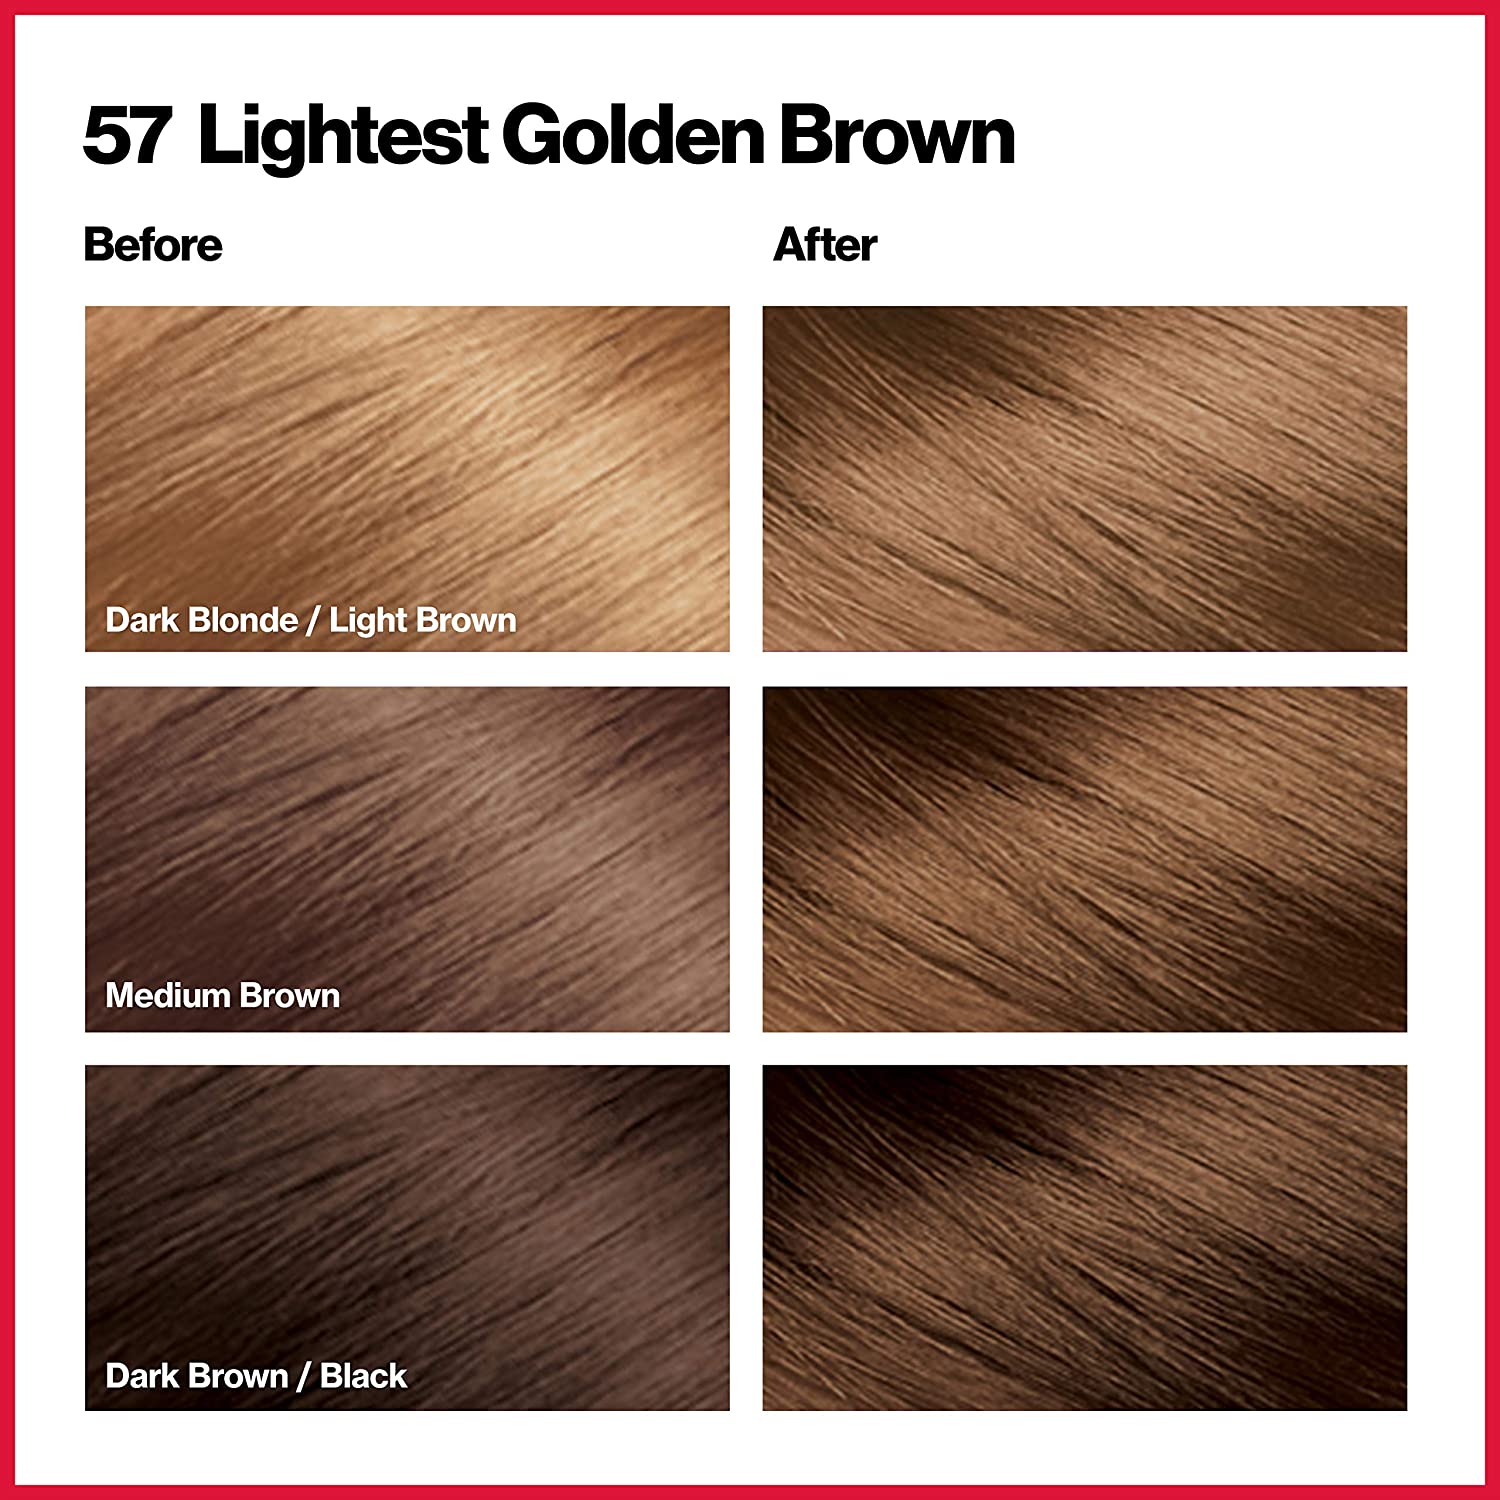 Lightest Golden Brown